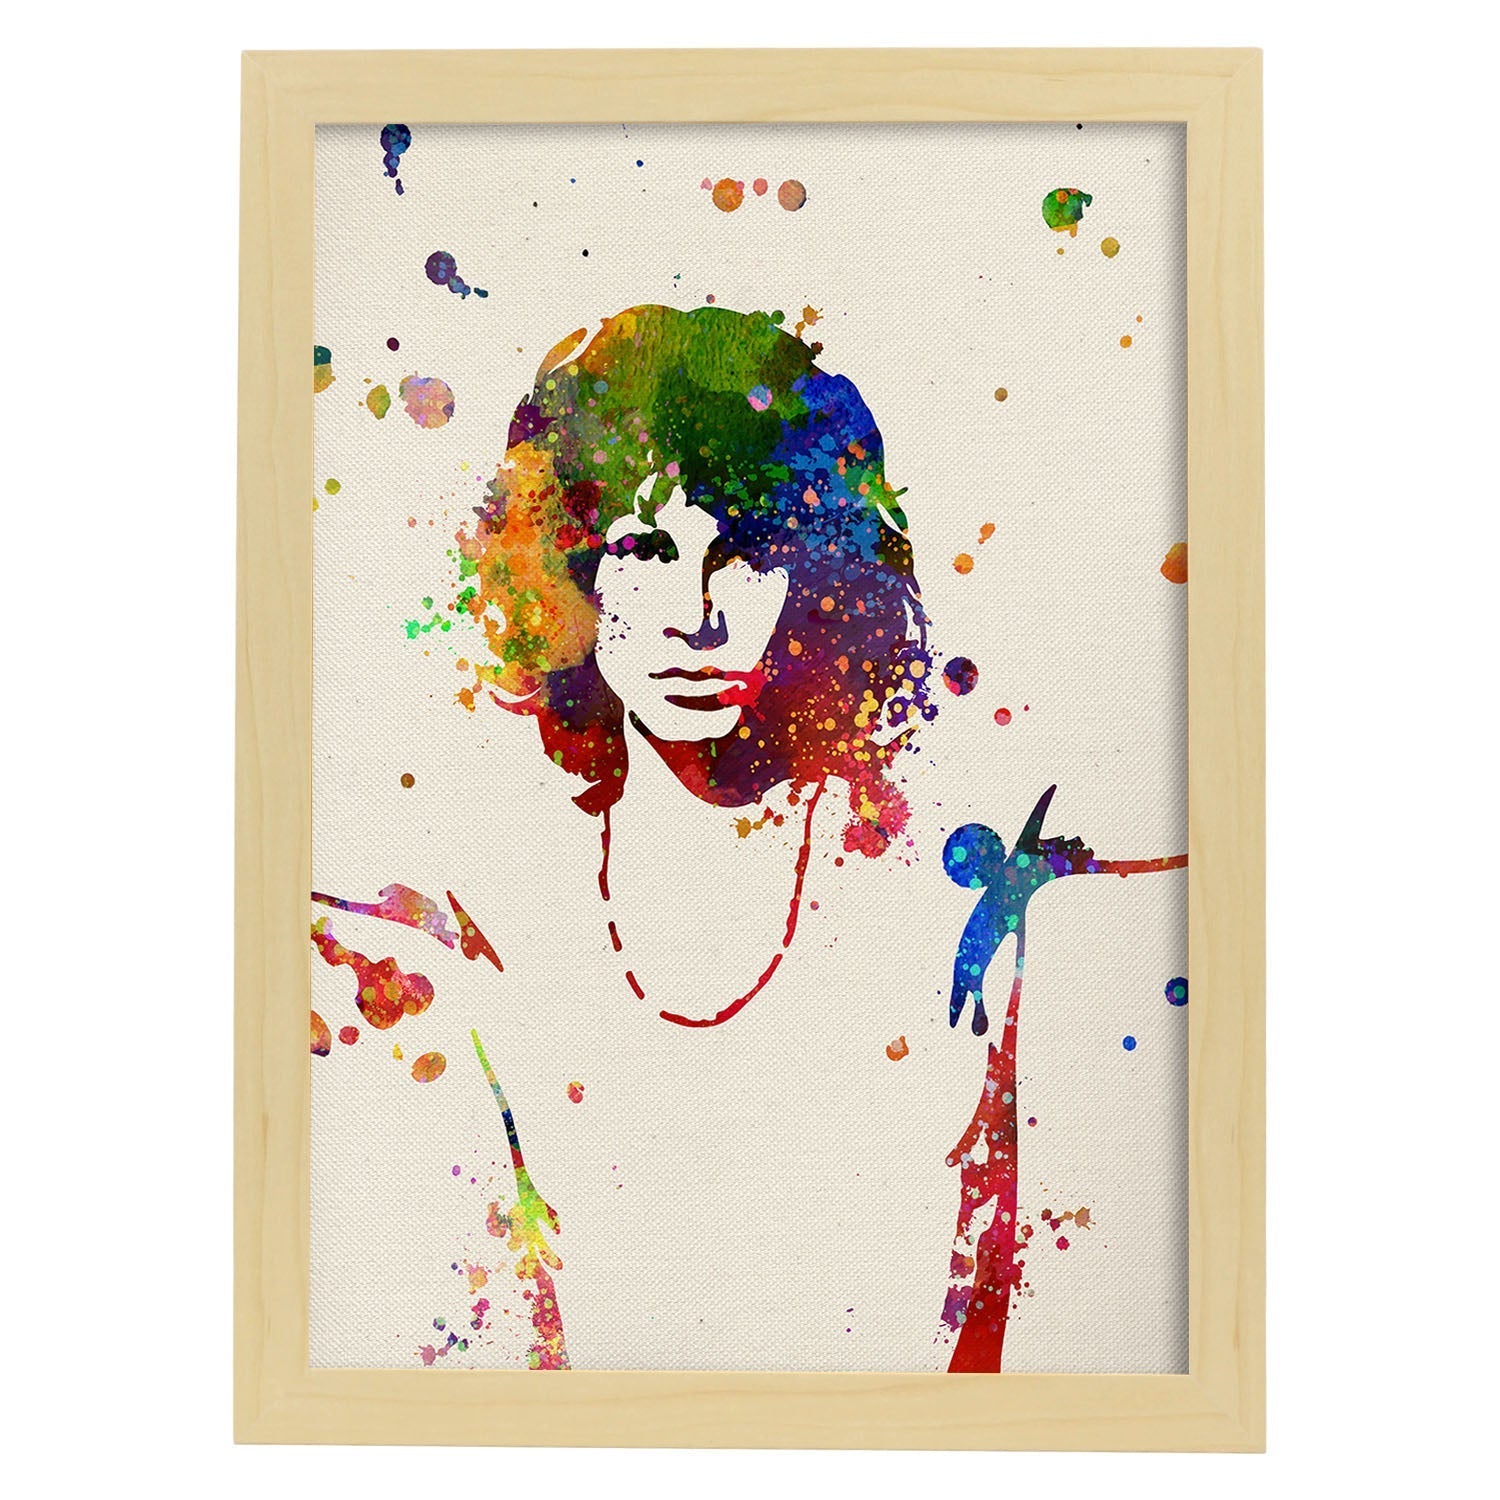 Poster imagen de Jim Morrison. Posters con diseño acuarela de famosos, actores, músicos-Artwork-Nacnic-A4-Marco Madera clara-Nacnic Estudio SL